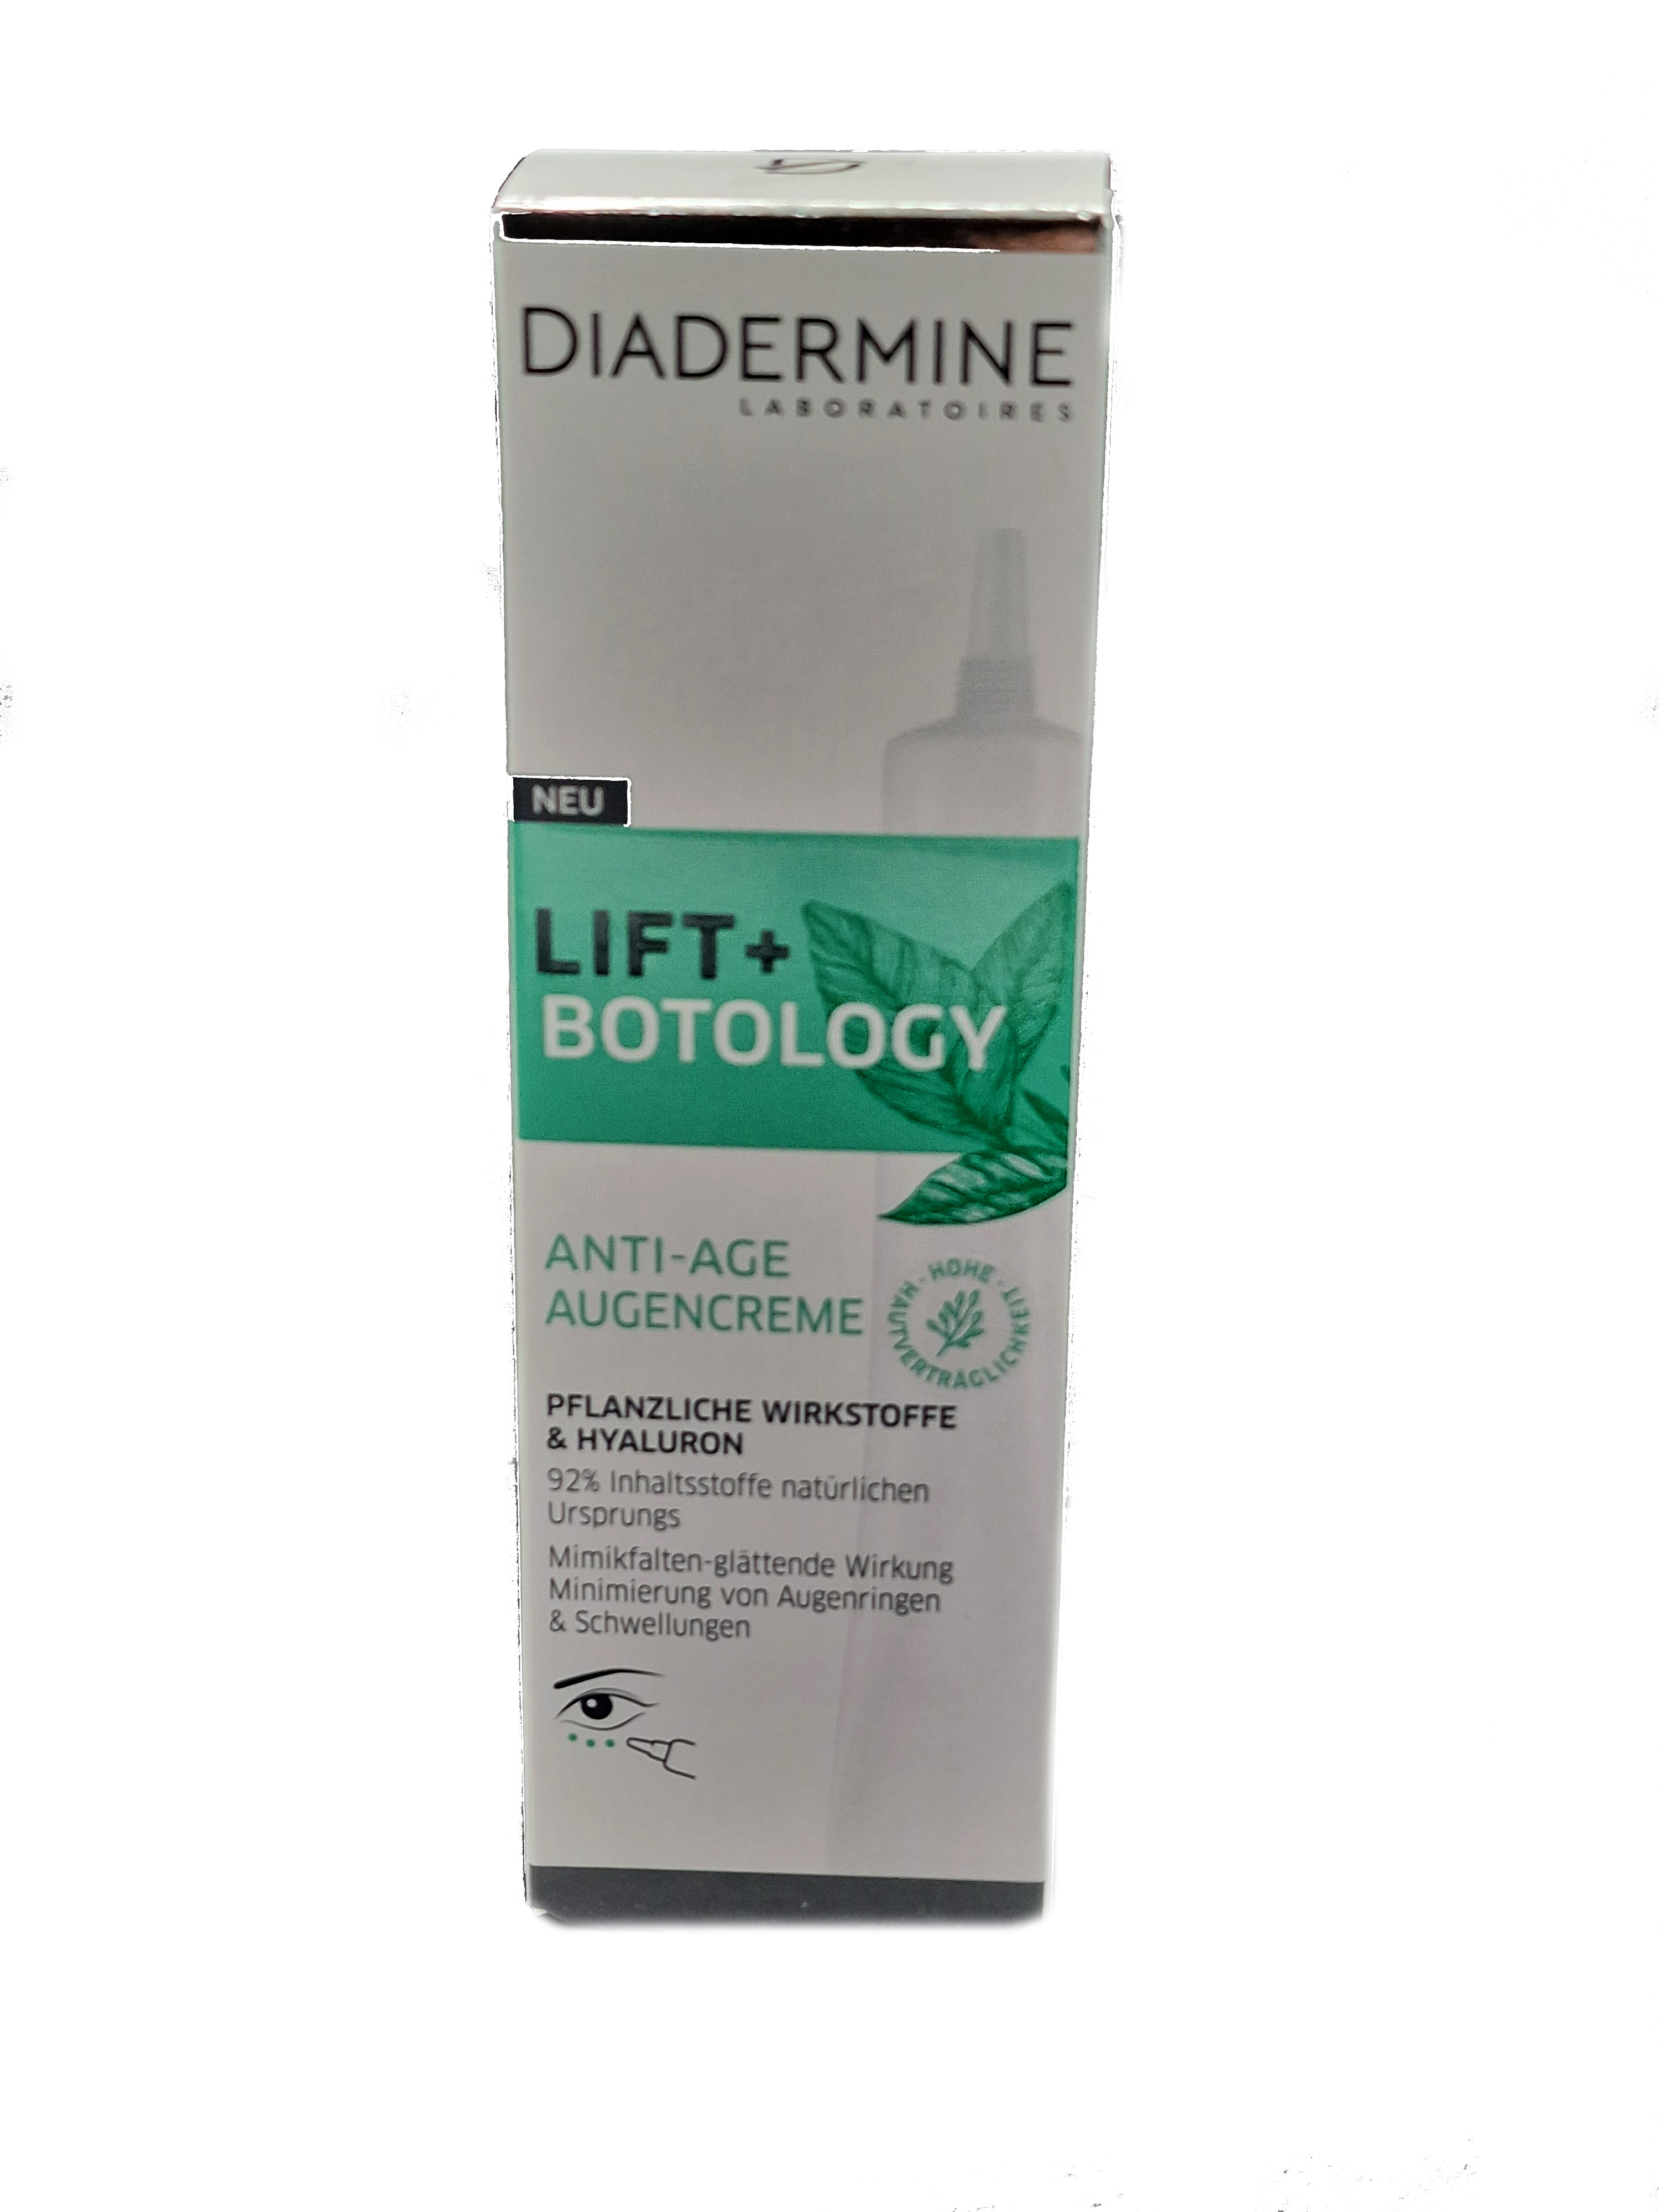 Diadermine 15ml Lift + Botology Anti-Age Augencreme